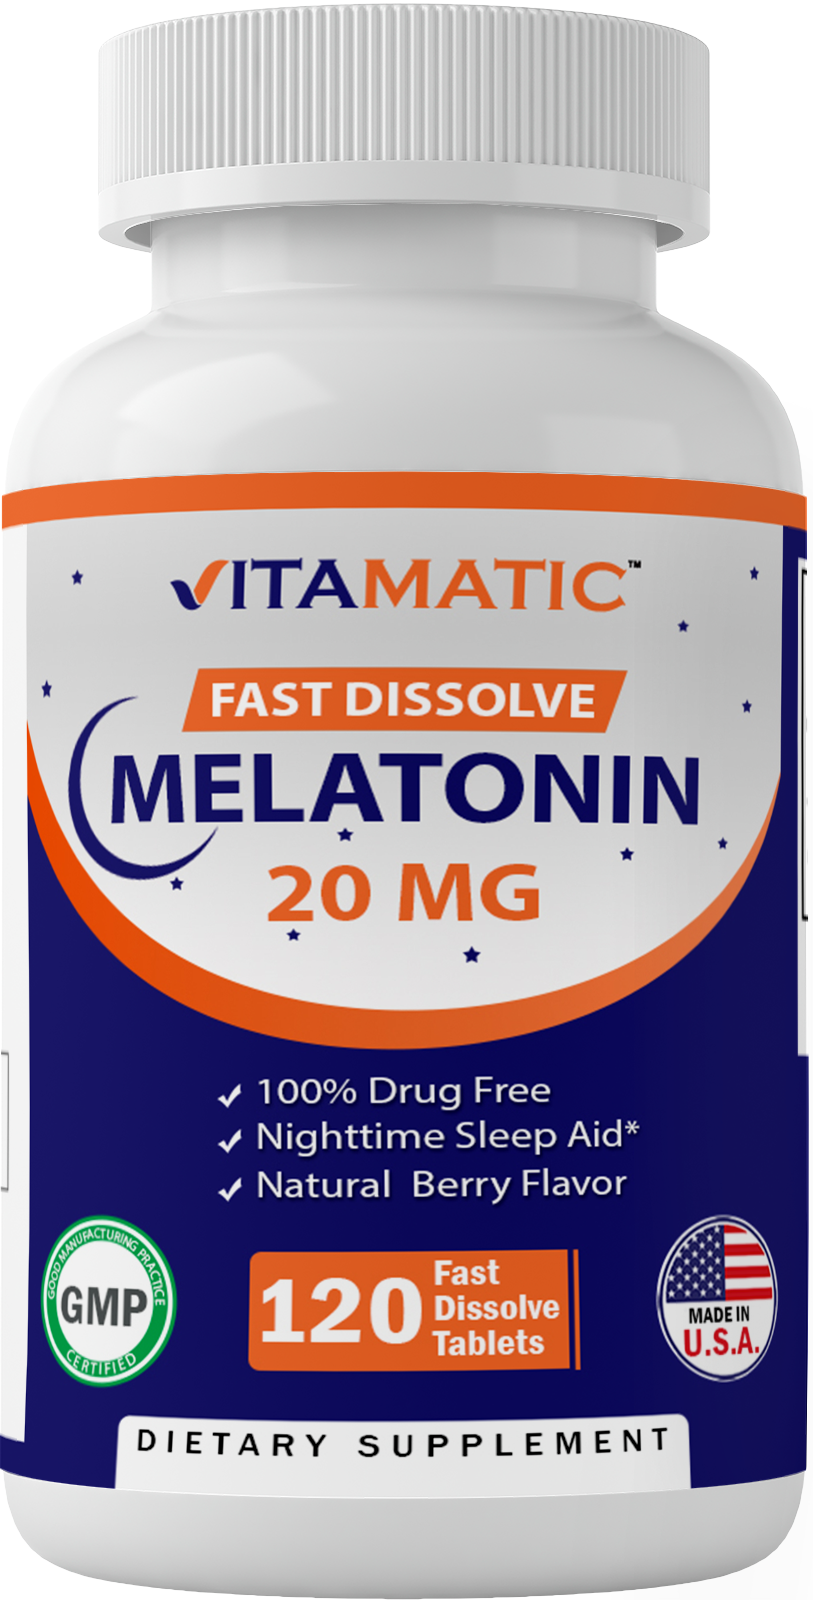 Vitamatic Melatonin 20mg Fast Dissolve 120 Tablets 20 mg ...